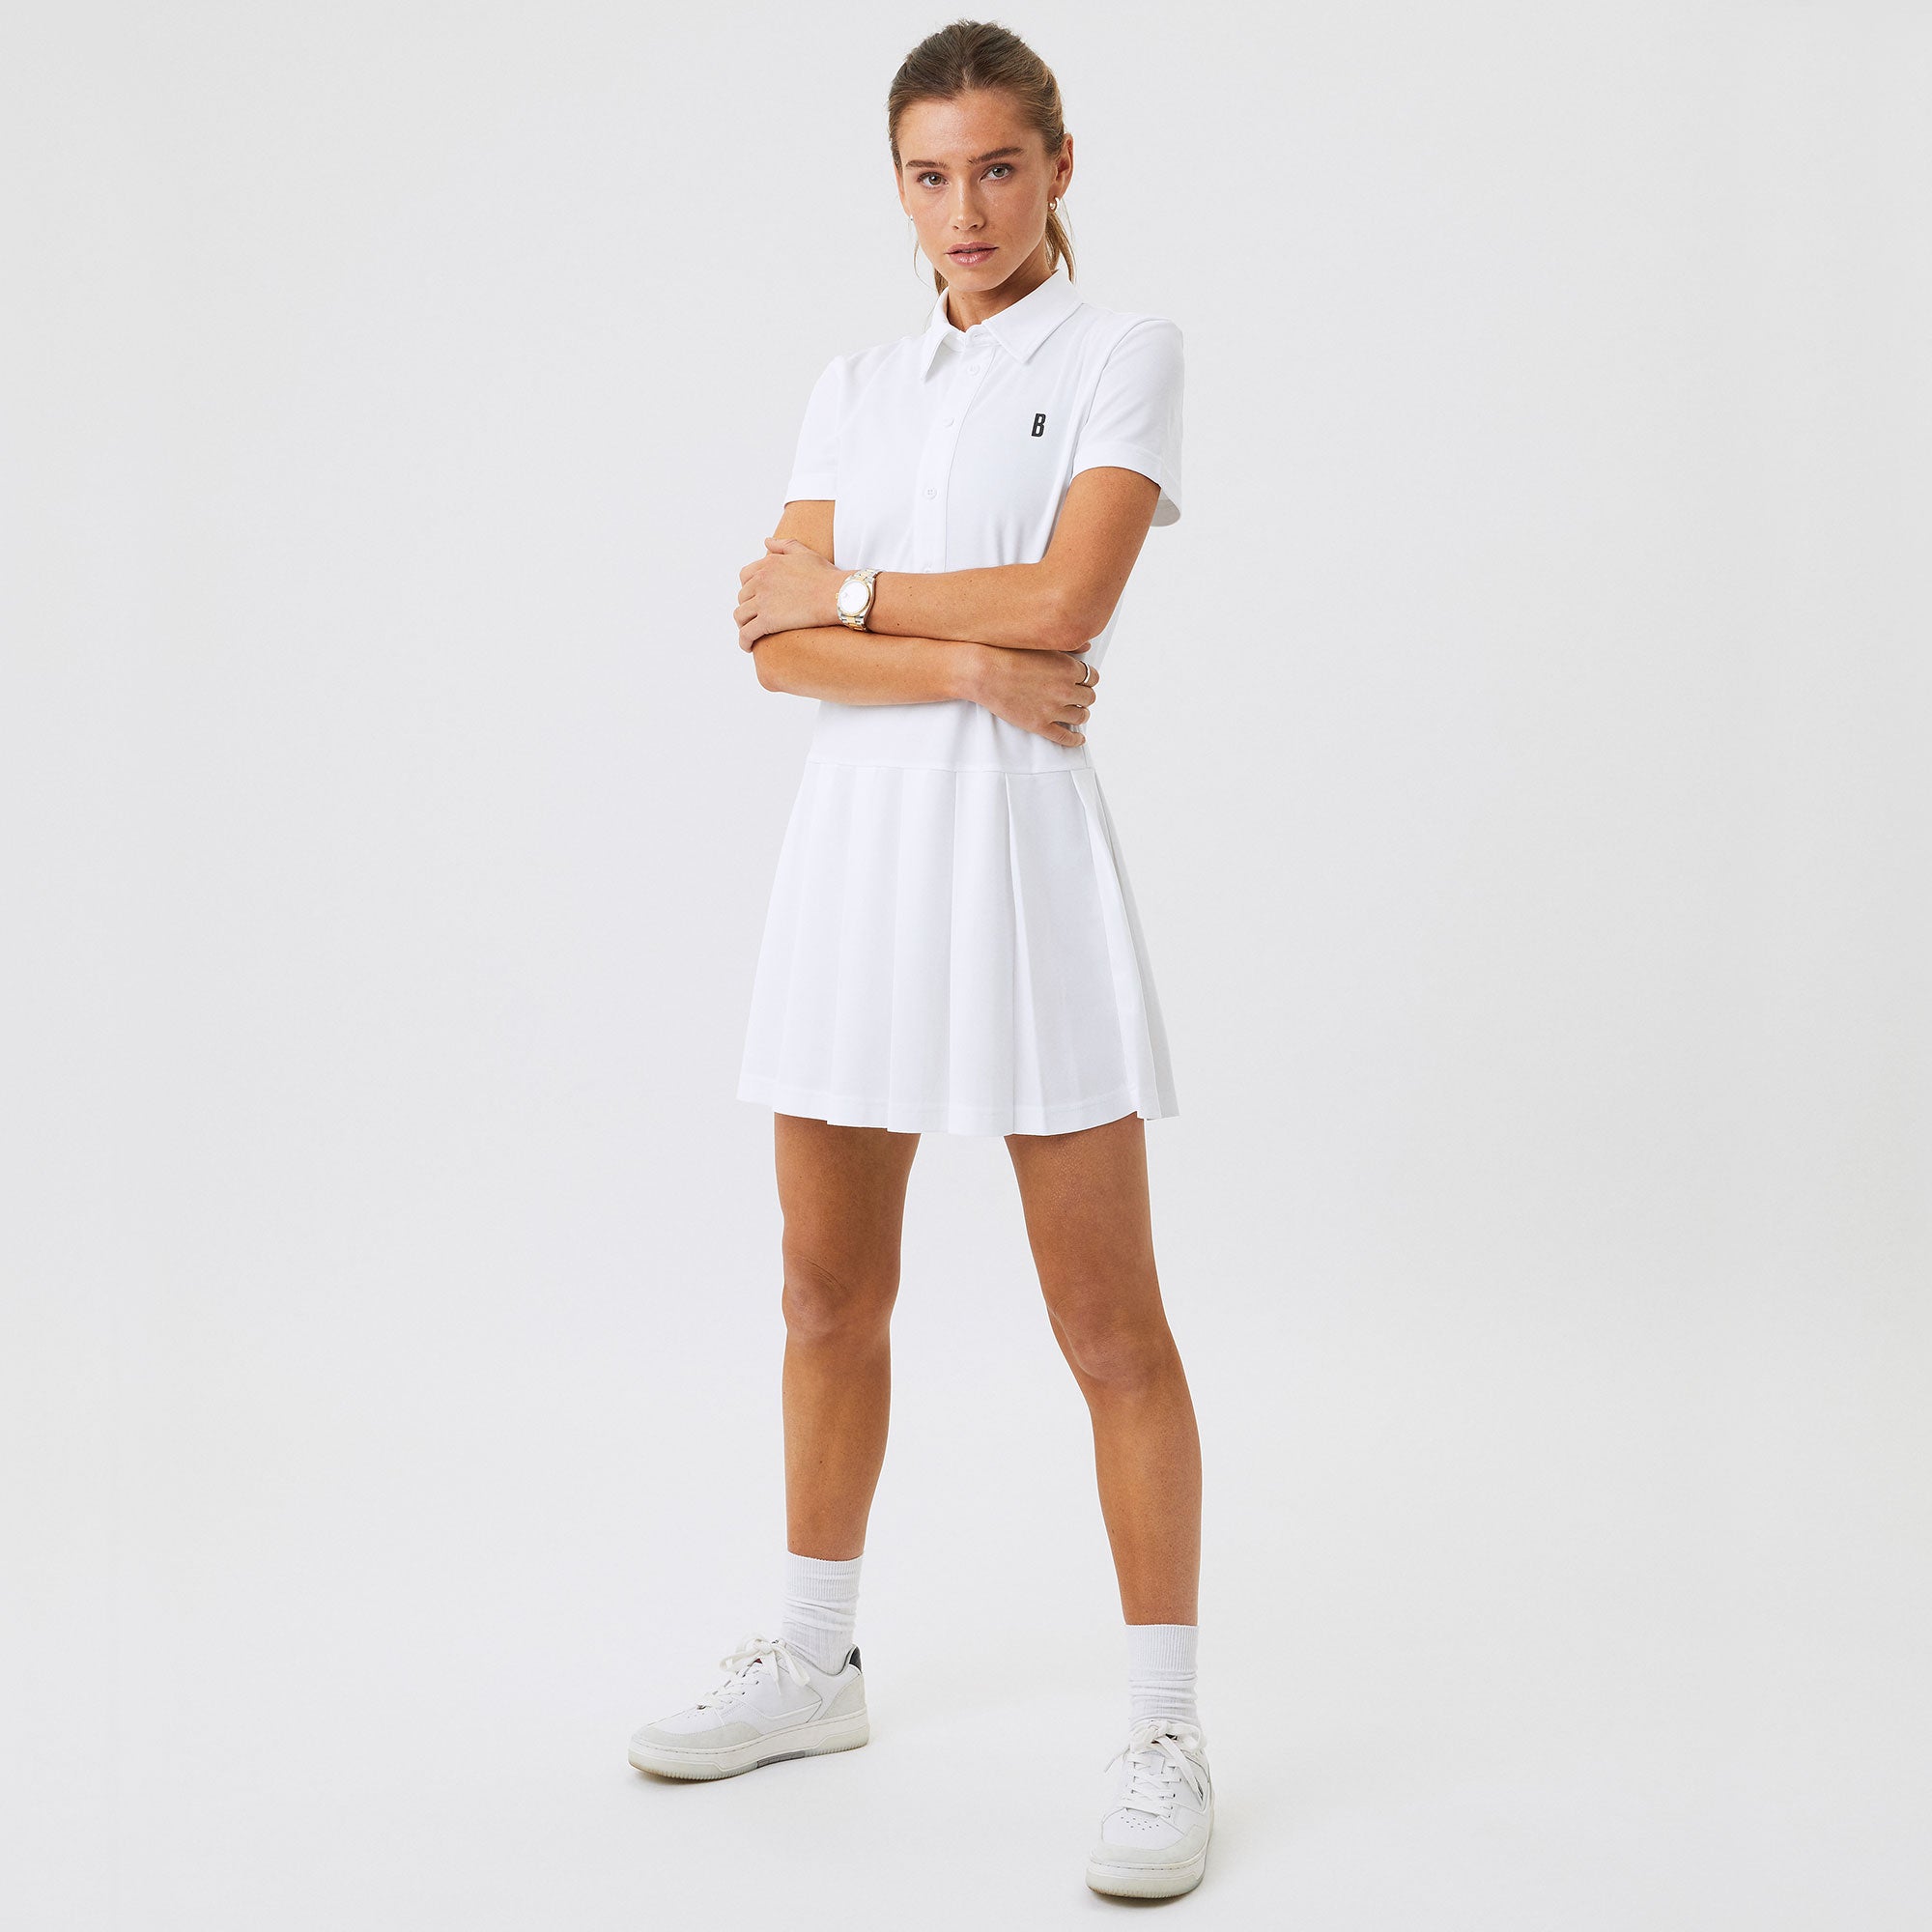 Björn Borg Ace Women's Tennis Polo Dress White (4)